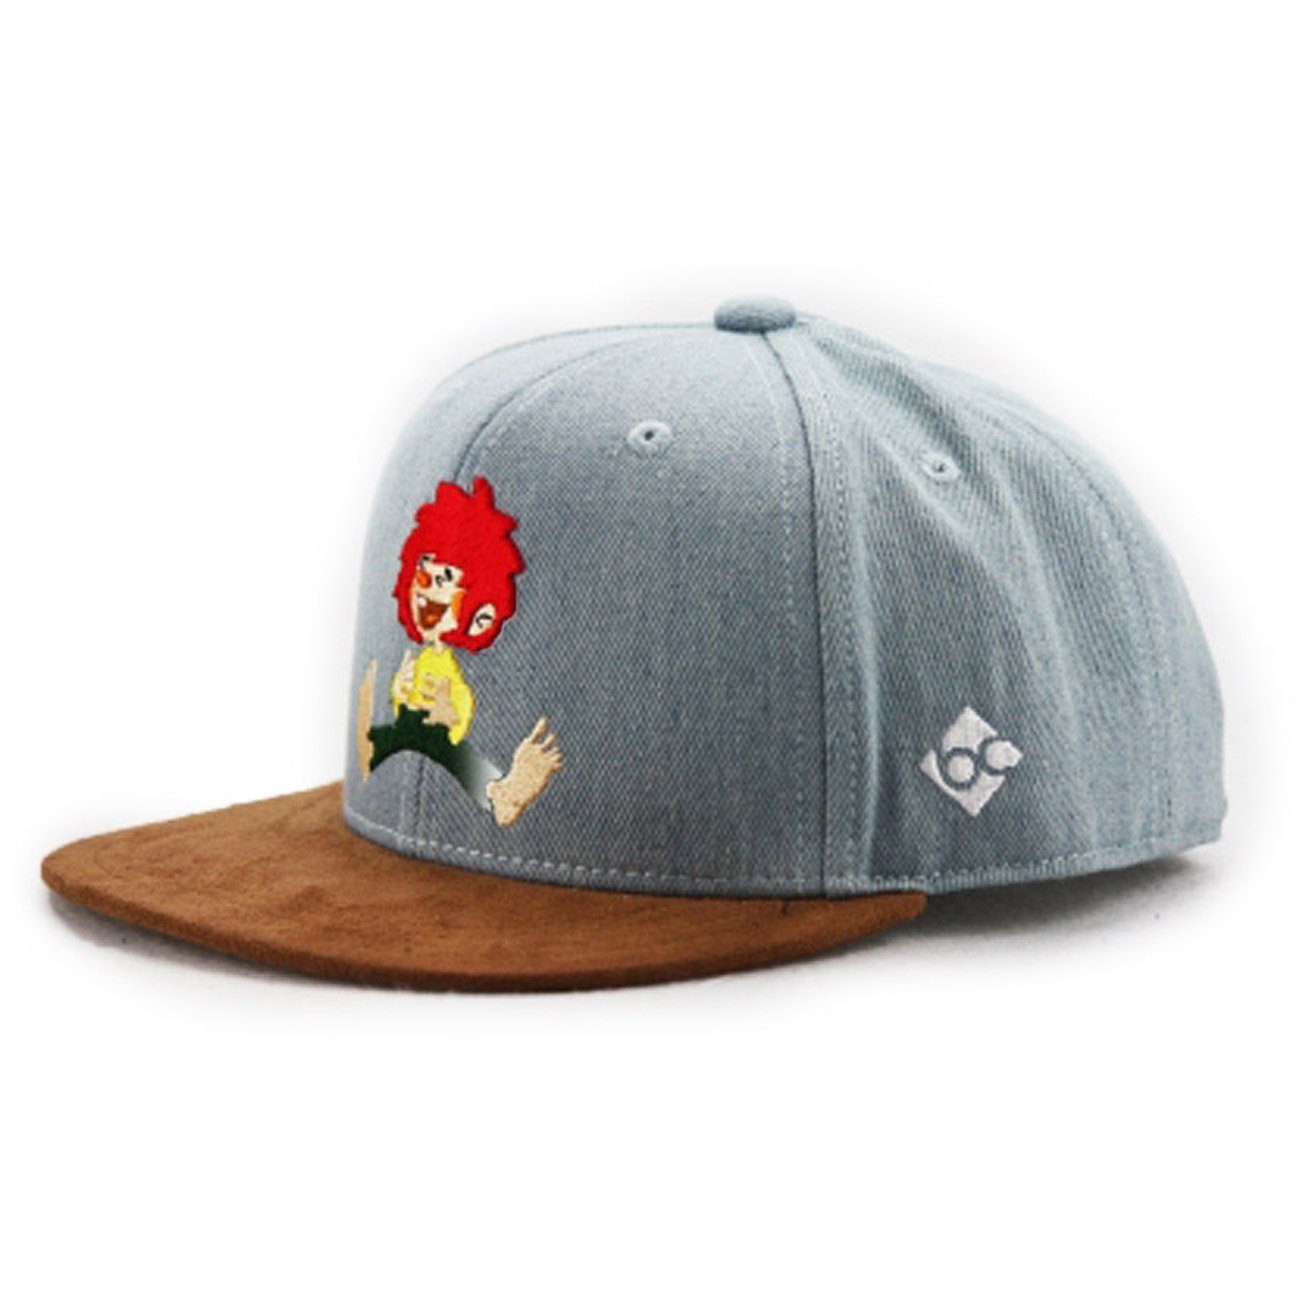 Pumuckl Bavarian Cap Baseball Caps